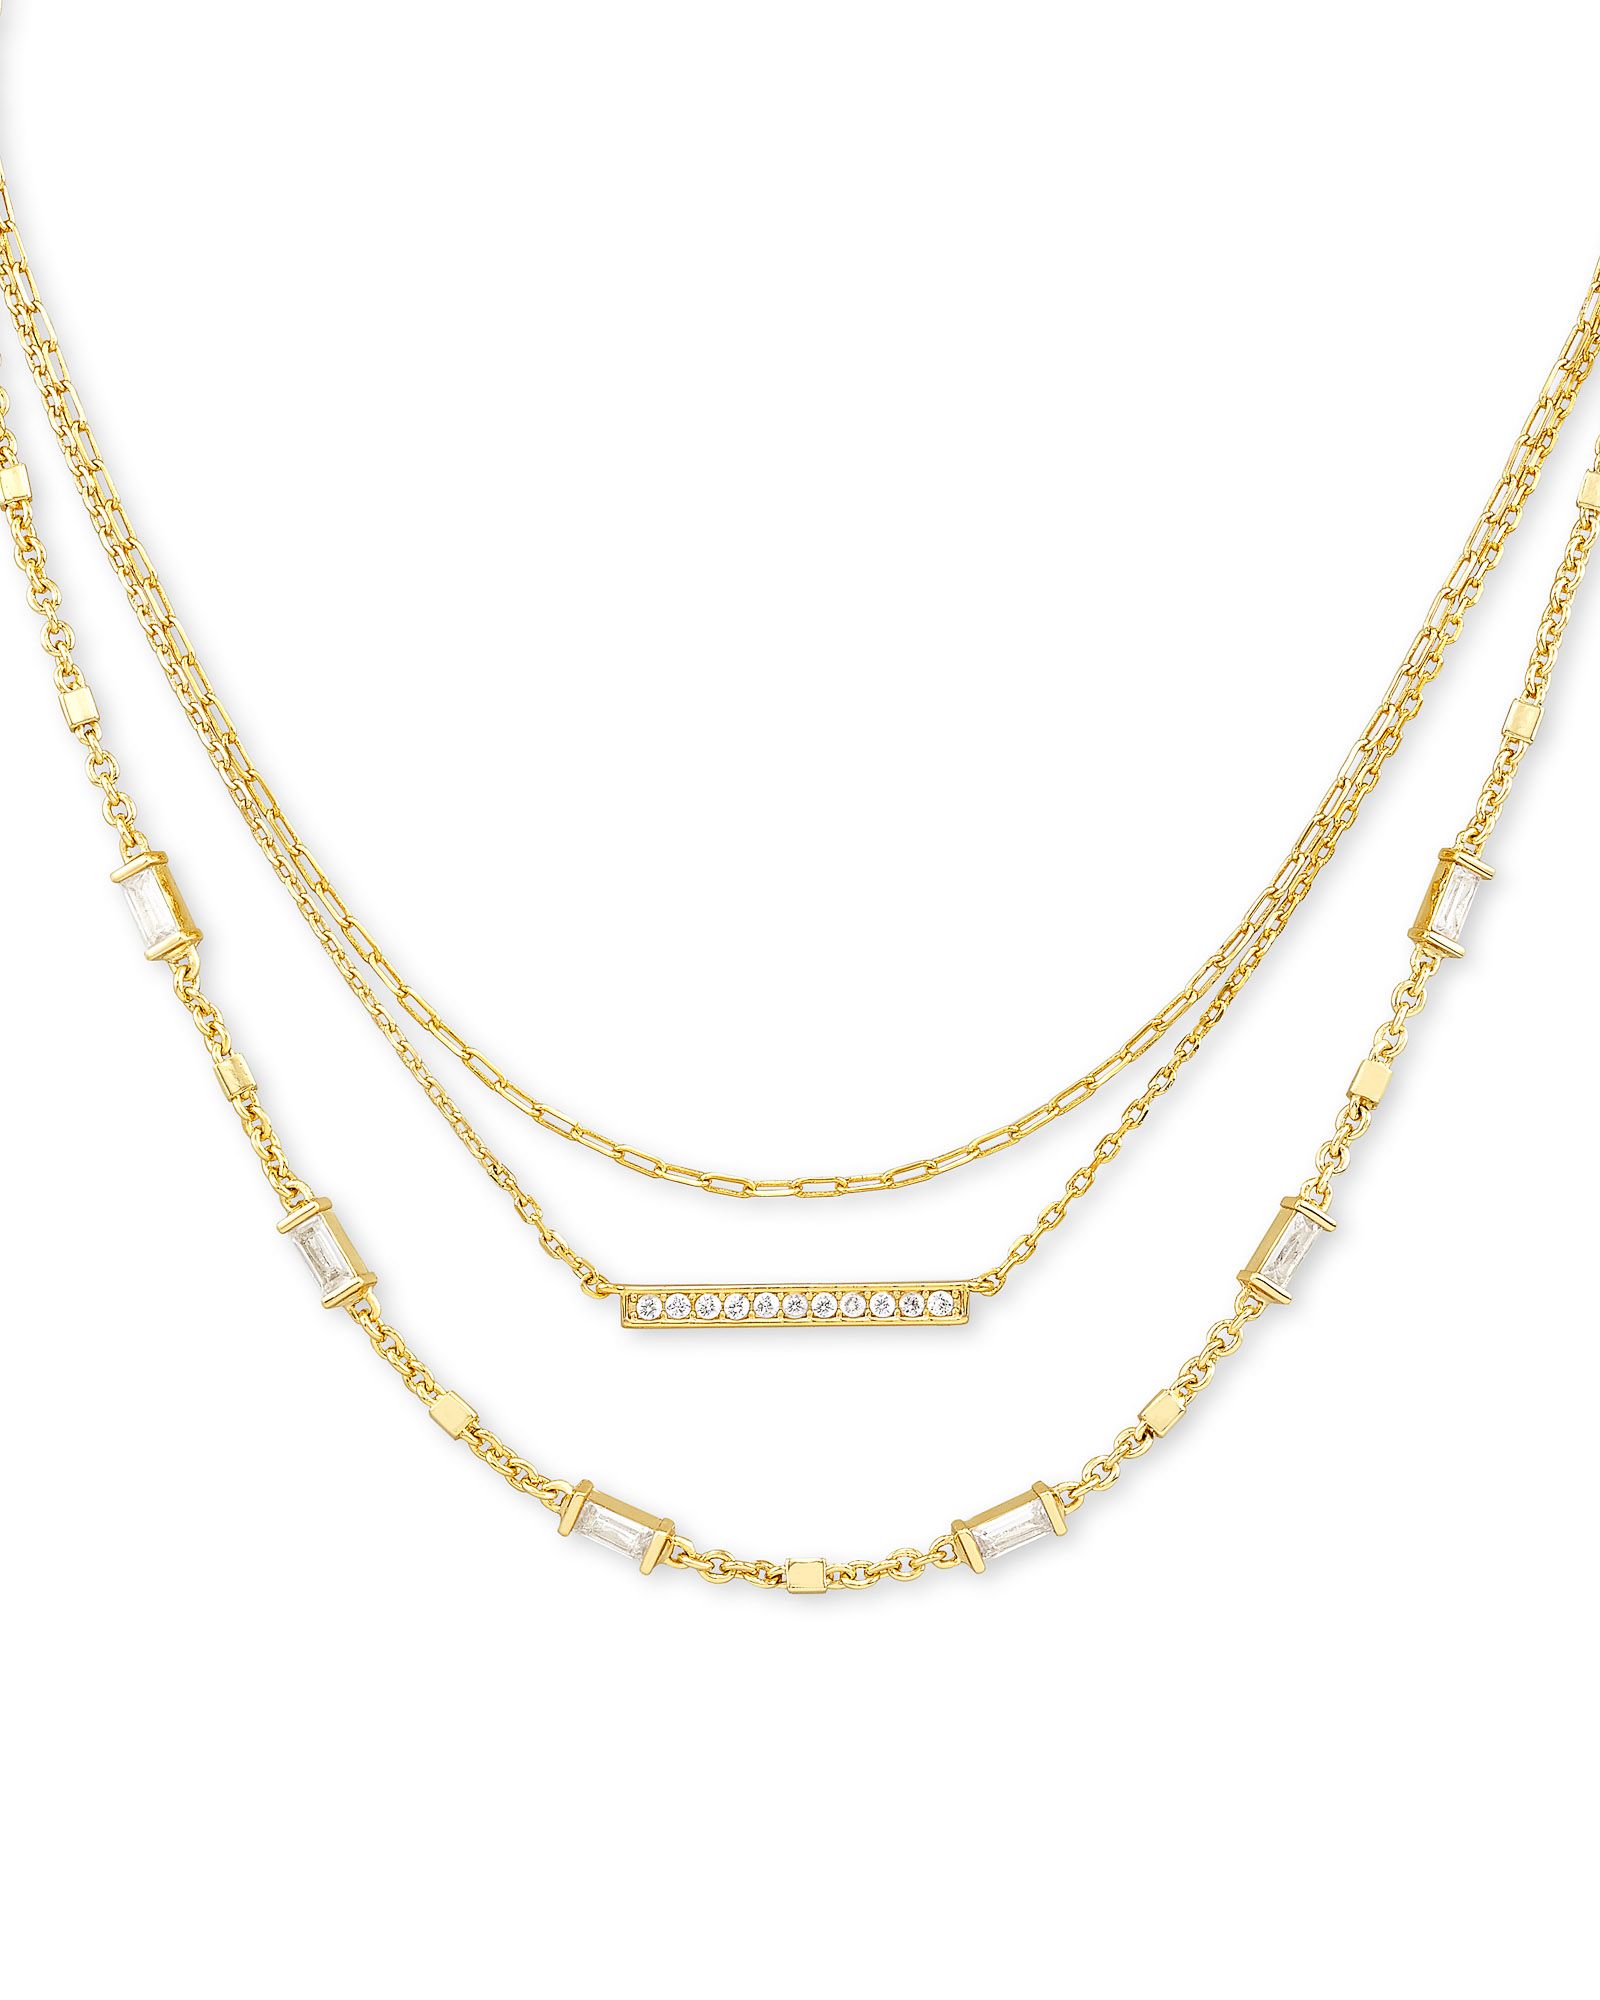 Addison Triple Strand Necklace in Gold | Kendra Scott | Kendra Scott